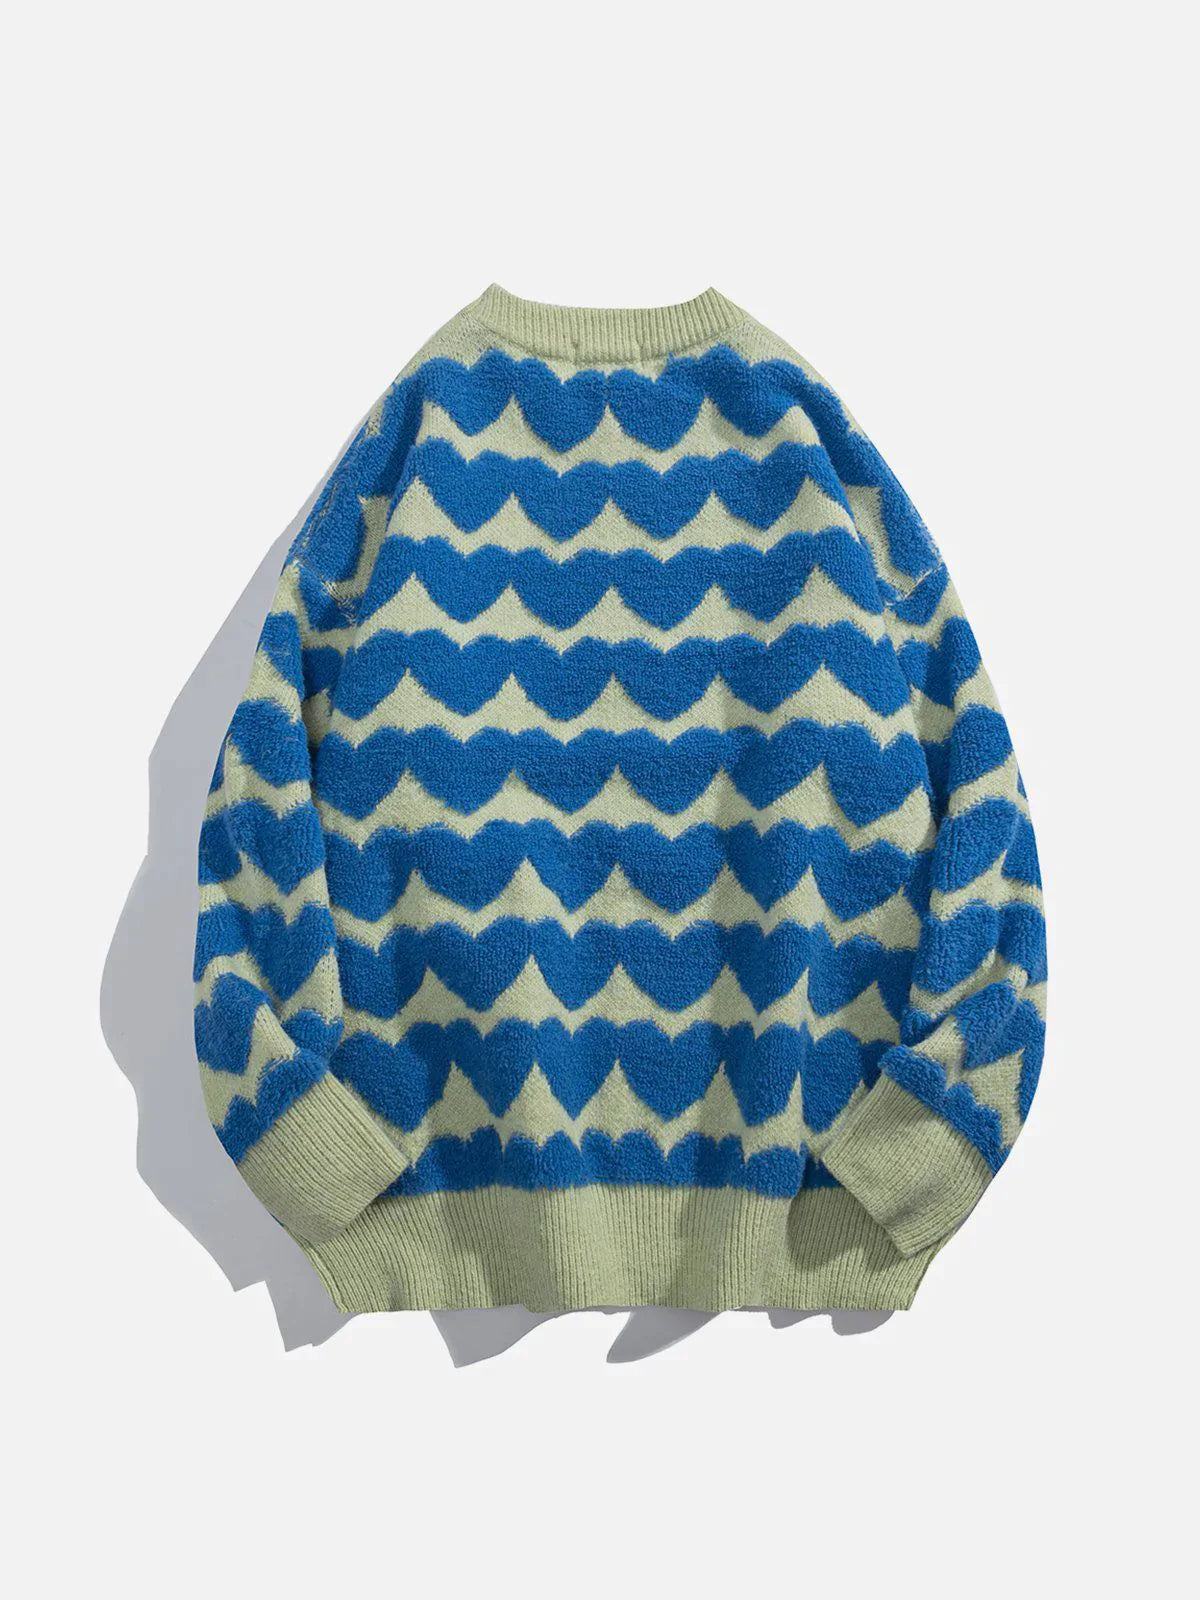 Majesda® - Heart Embroidery Sweater outfit ideas streetwear fashion